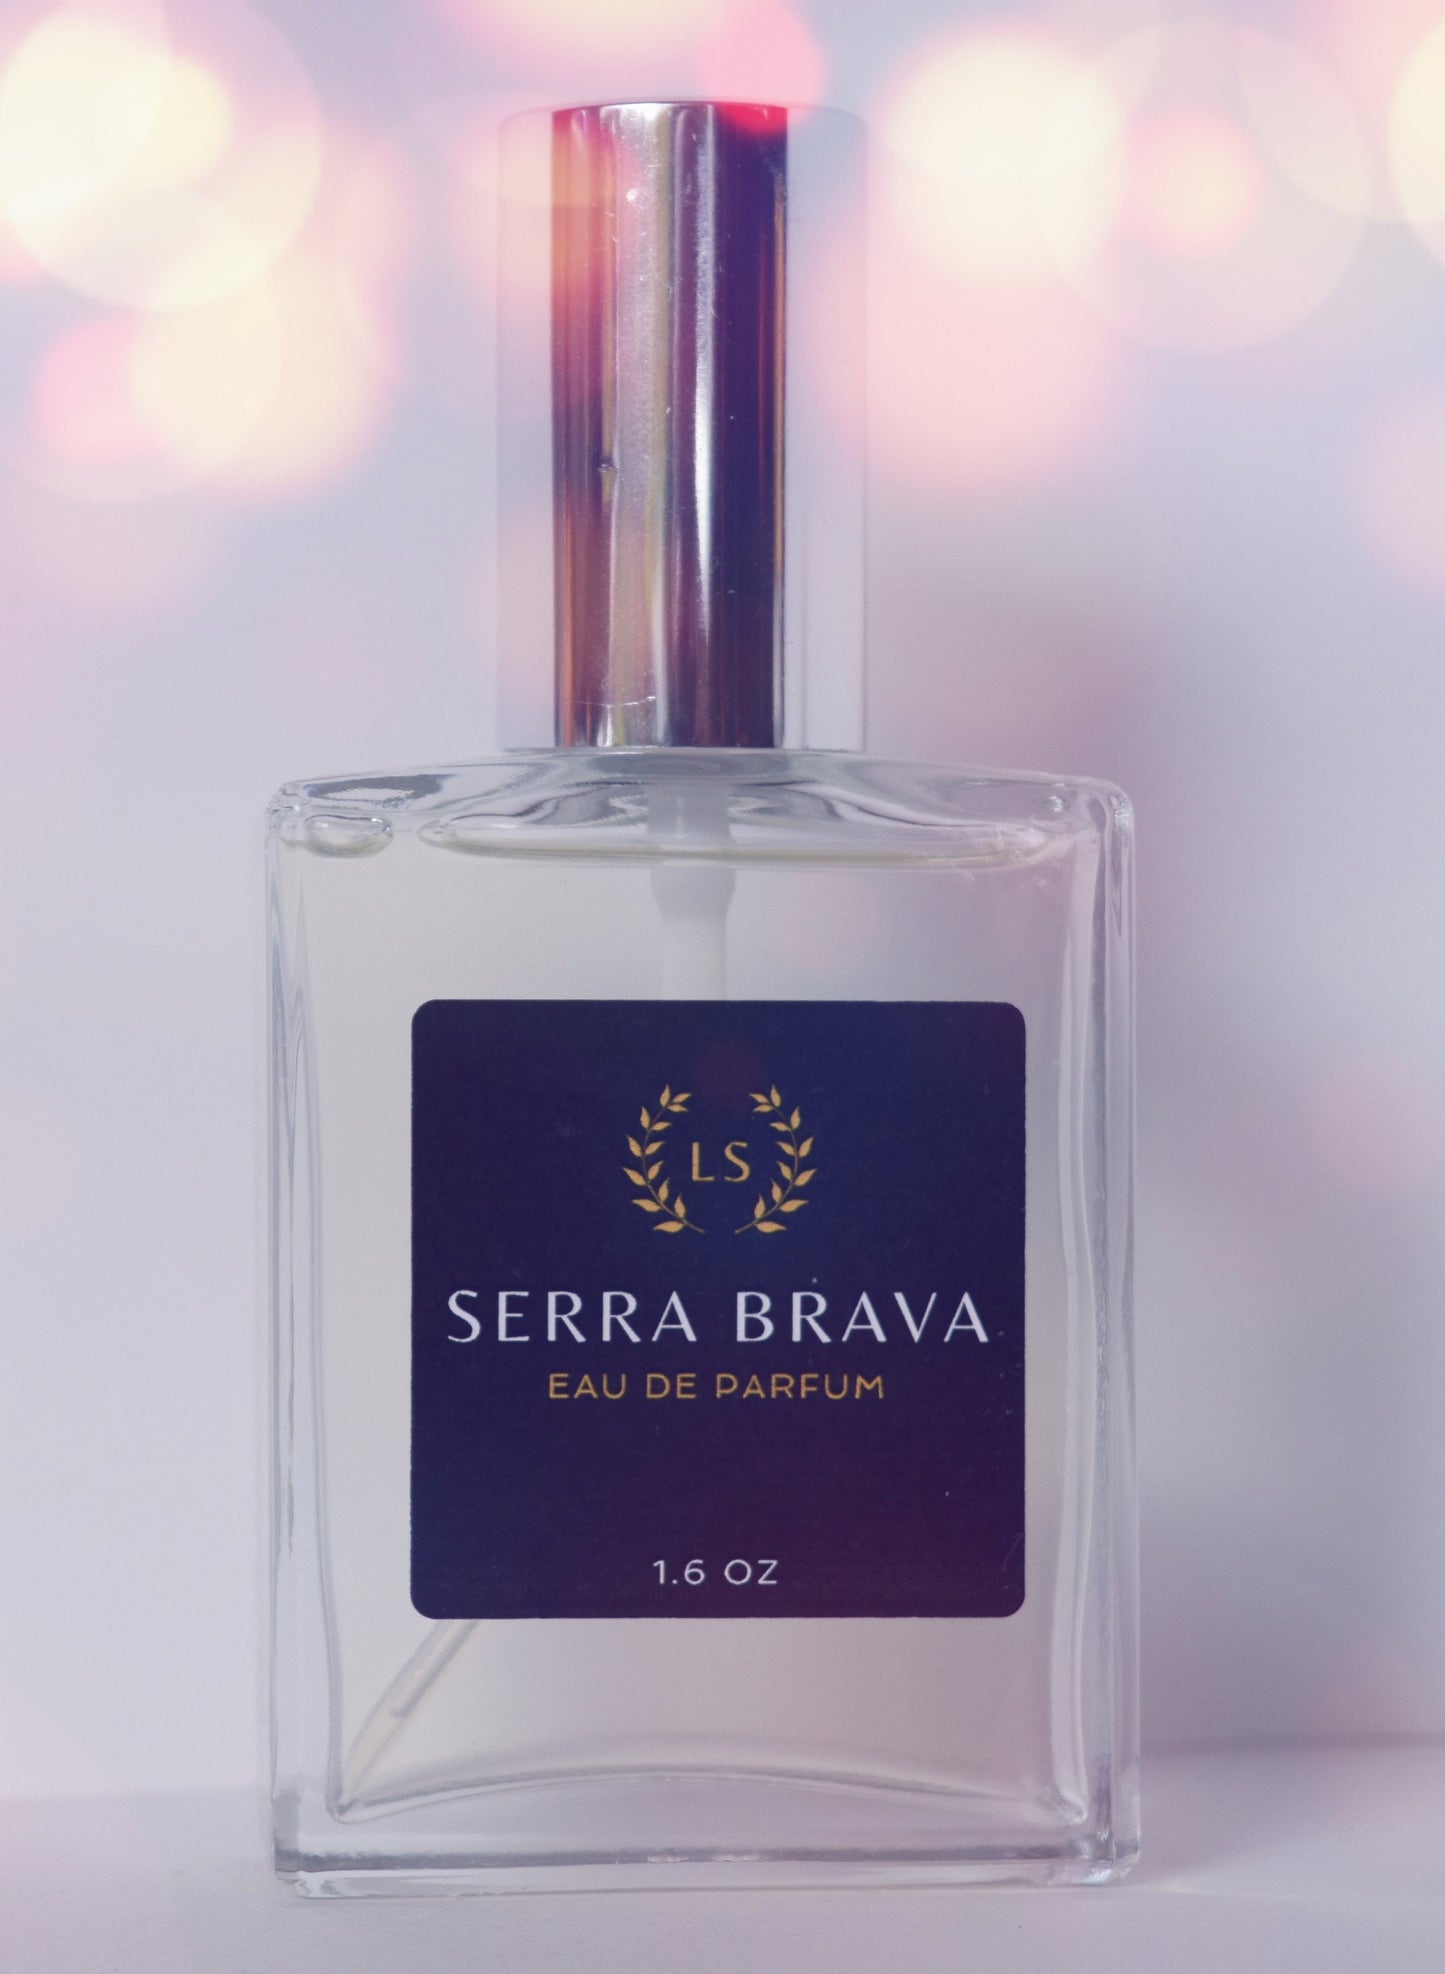 Men's Cologne Serra Brava - Eau de Parfum - Smoke, Wood & Musk Fragrance